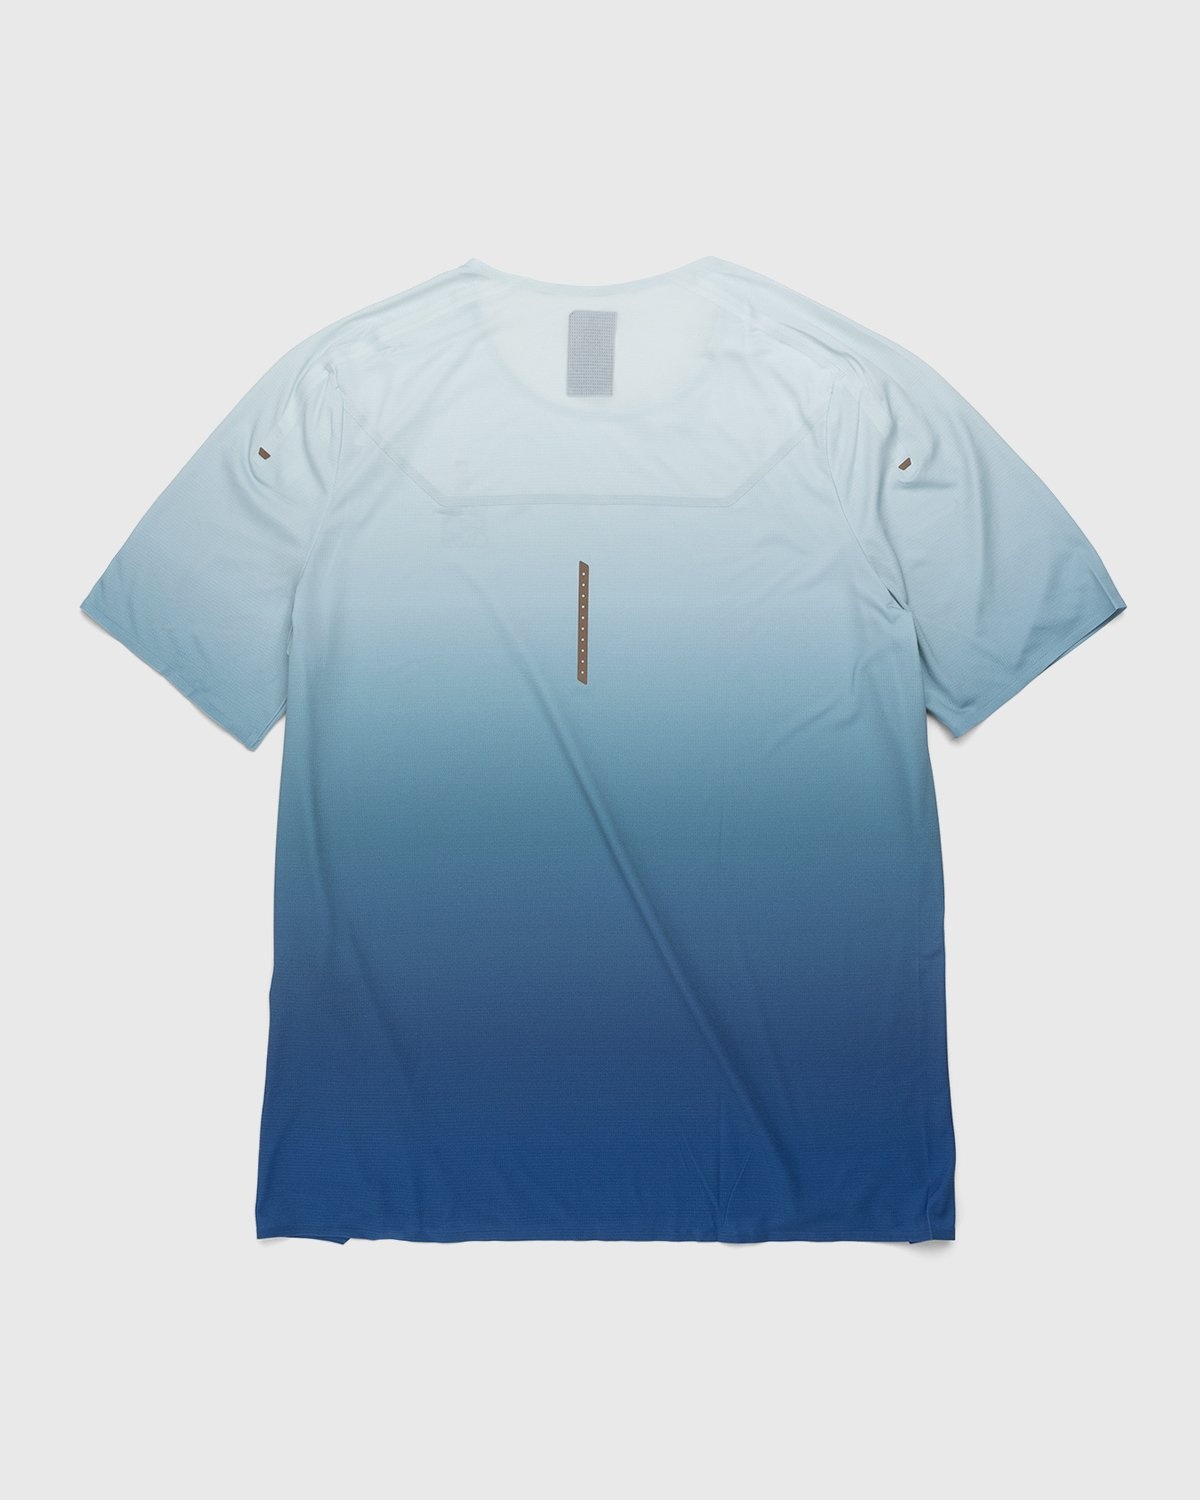 Loewe x On – Women's Performance T-Shirt Gradient Grey - T-Shirts - Blue - Image 2